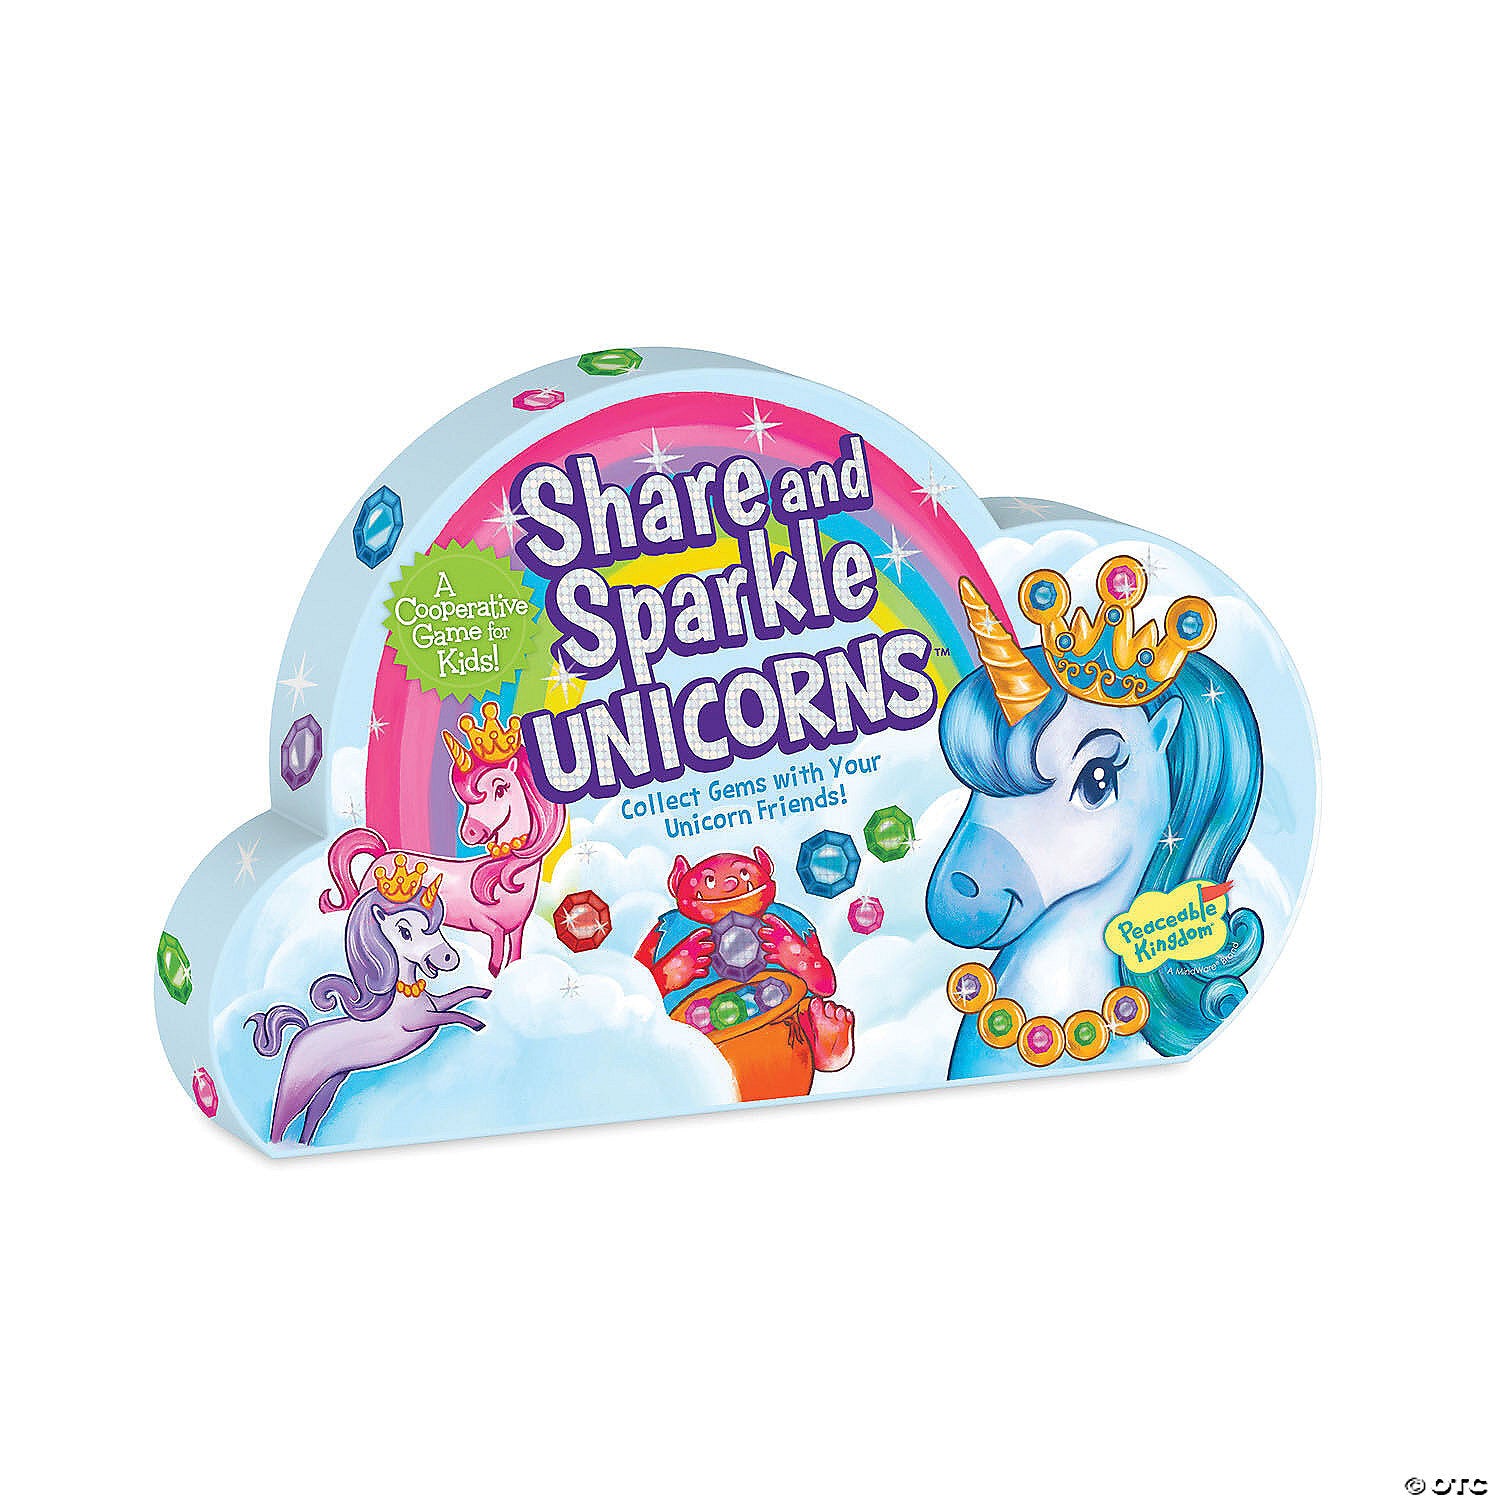 Sparkle and Share Unicorns